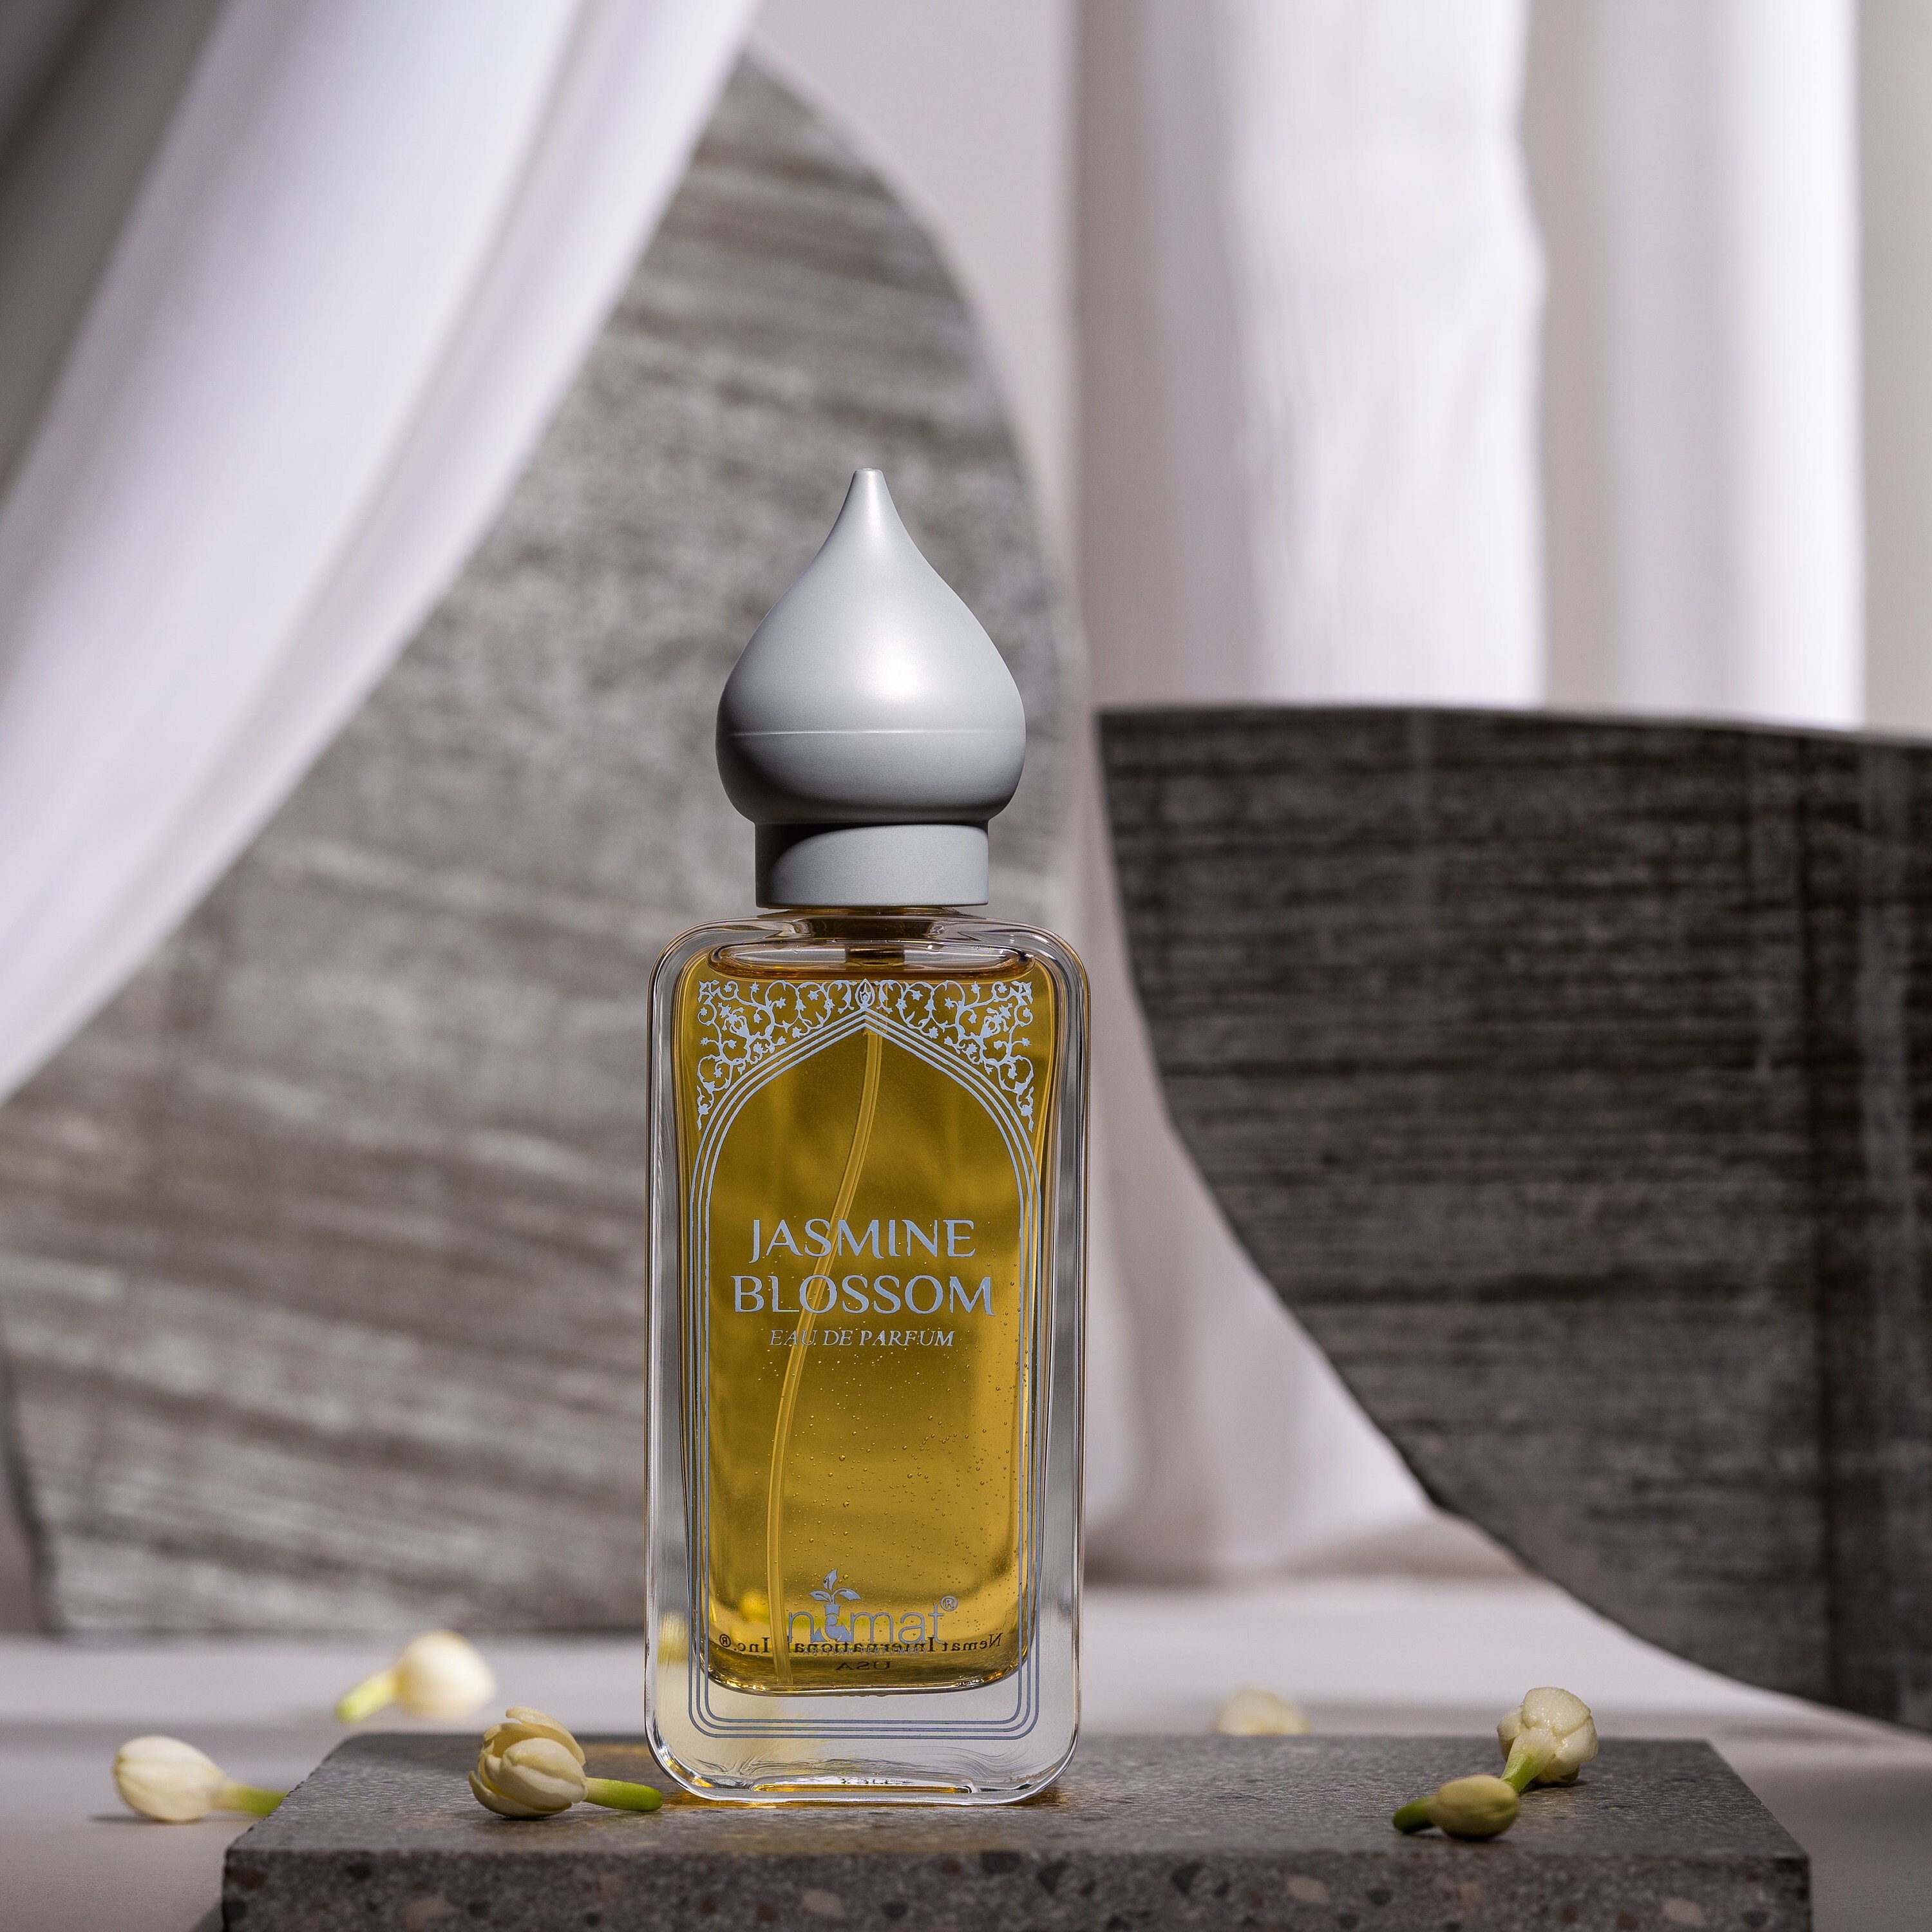 Nemat Gardenia Perfume Oil, 10 ML